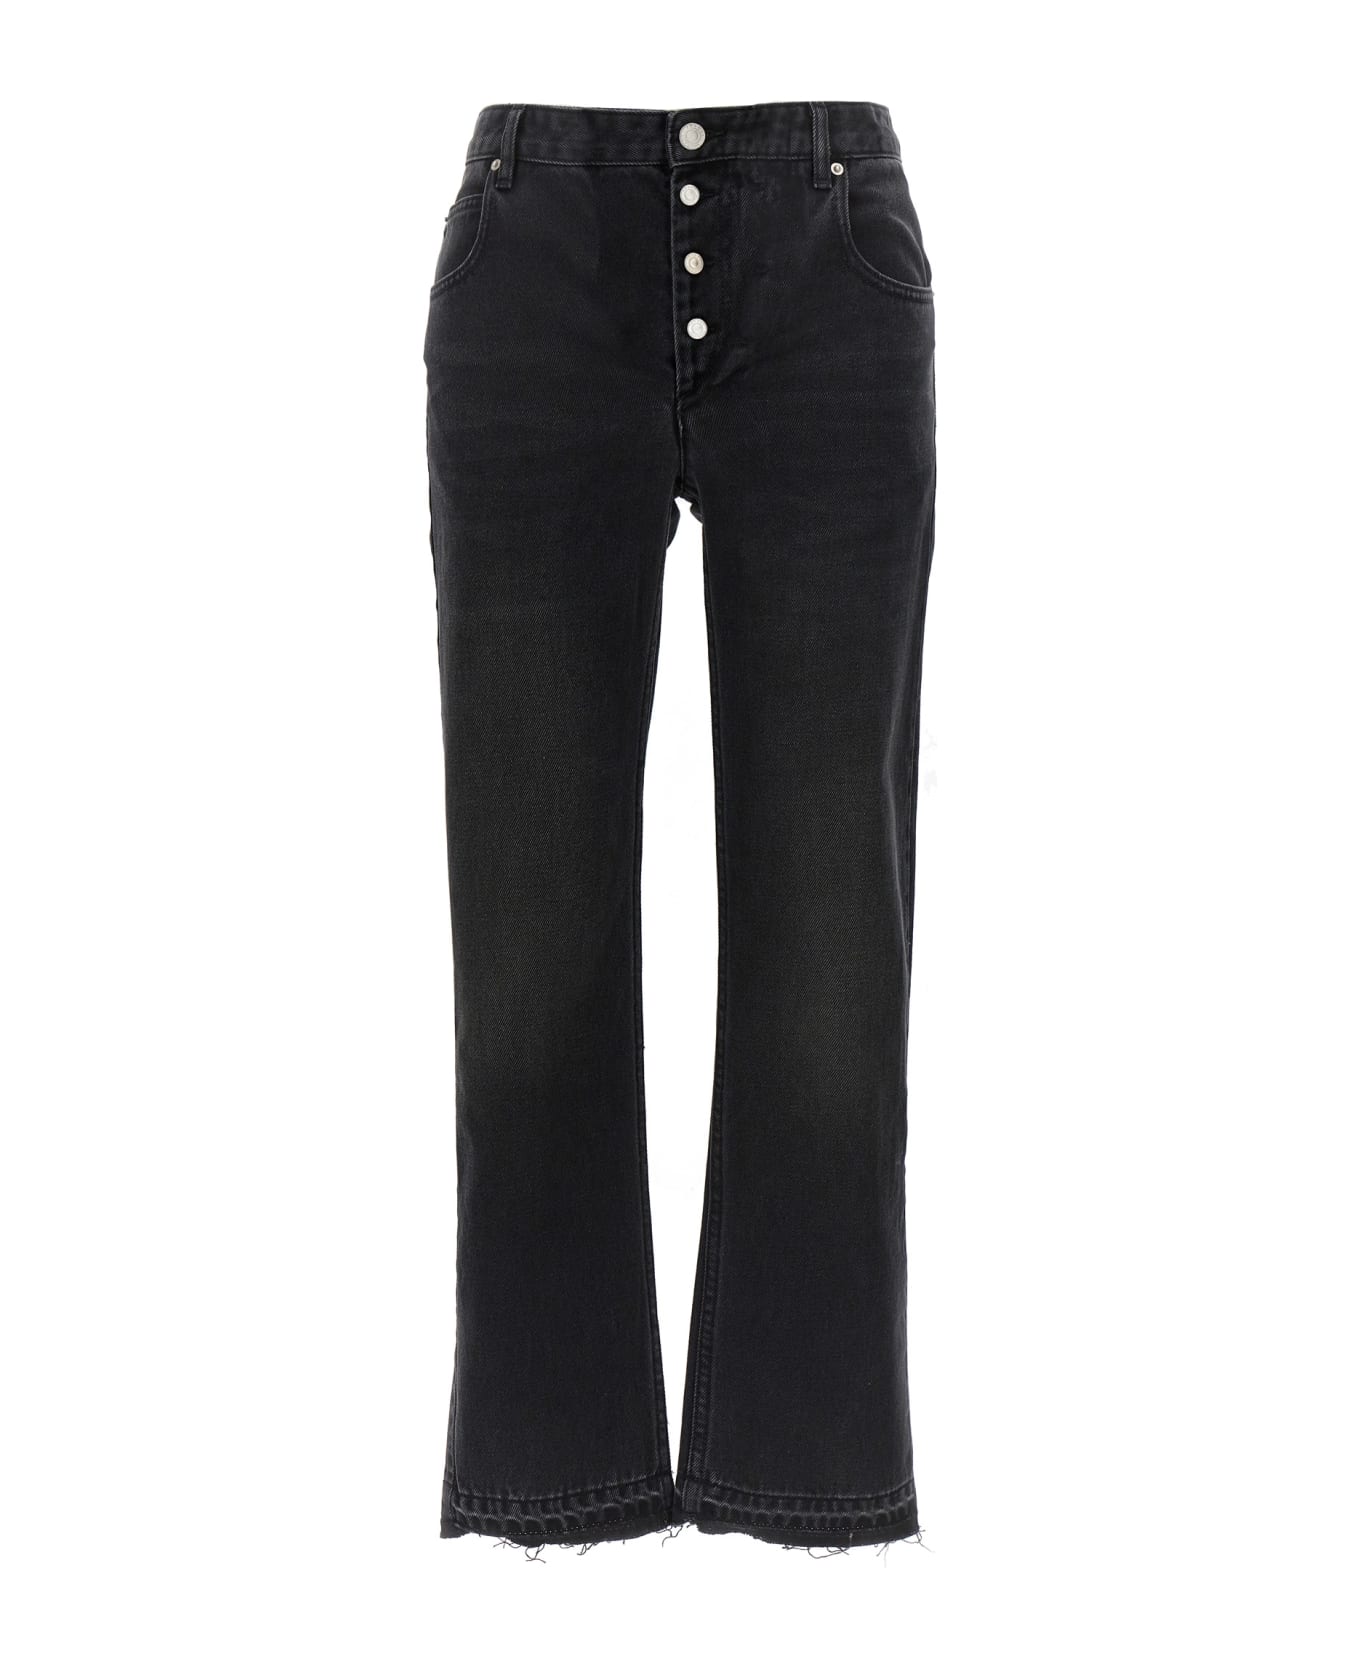 Isabel Marant Jemina High Waist Jeans - FADED BLACK デニム